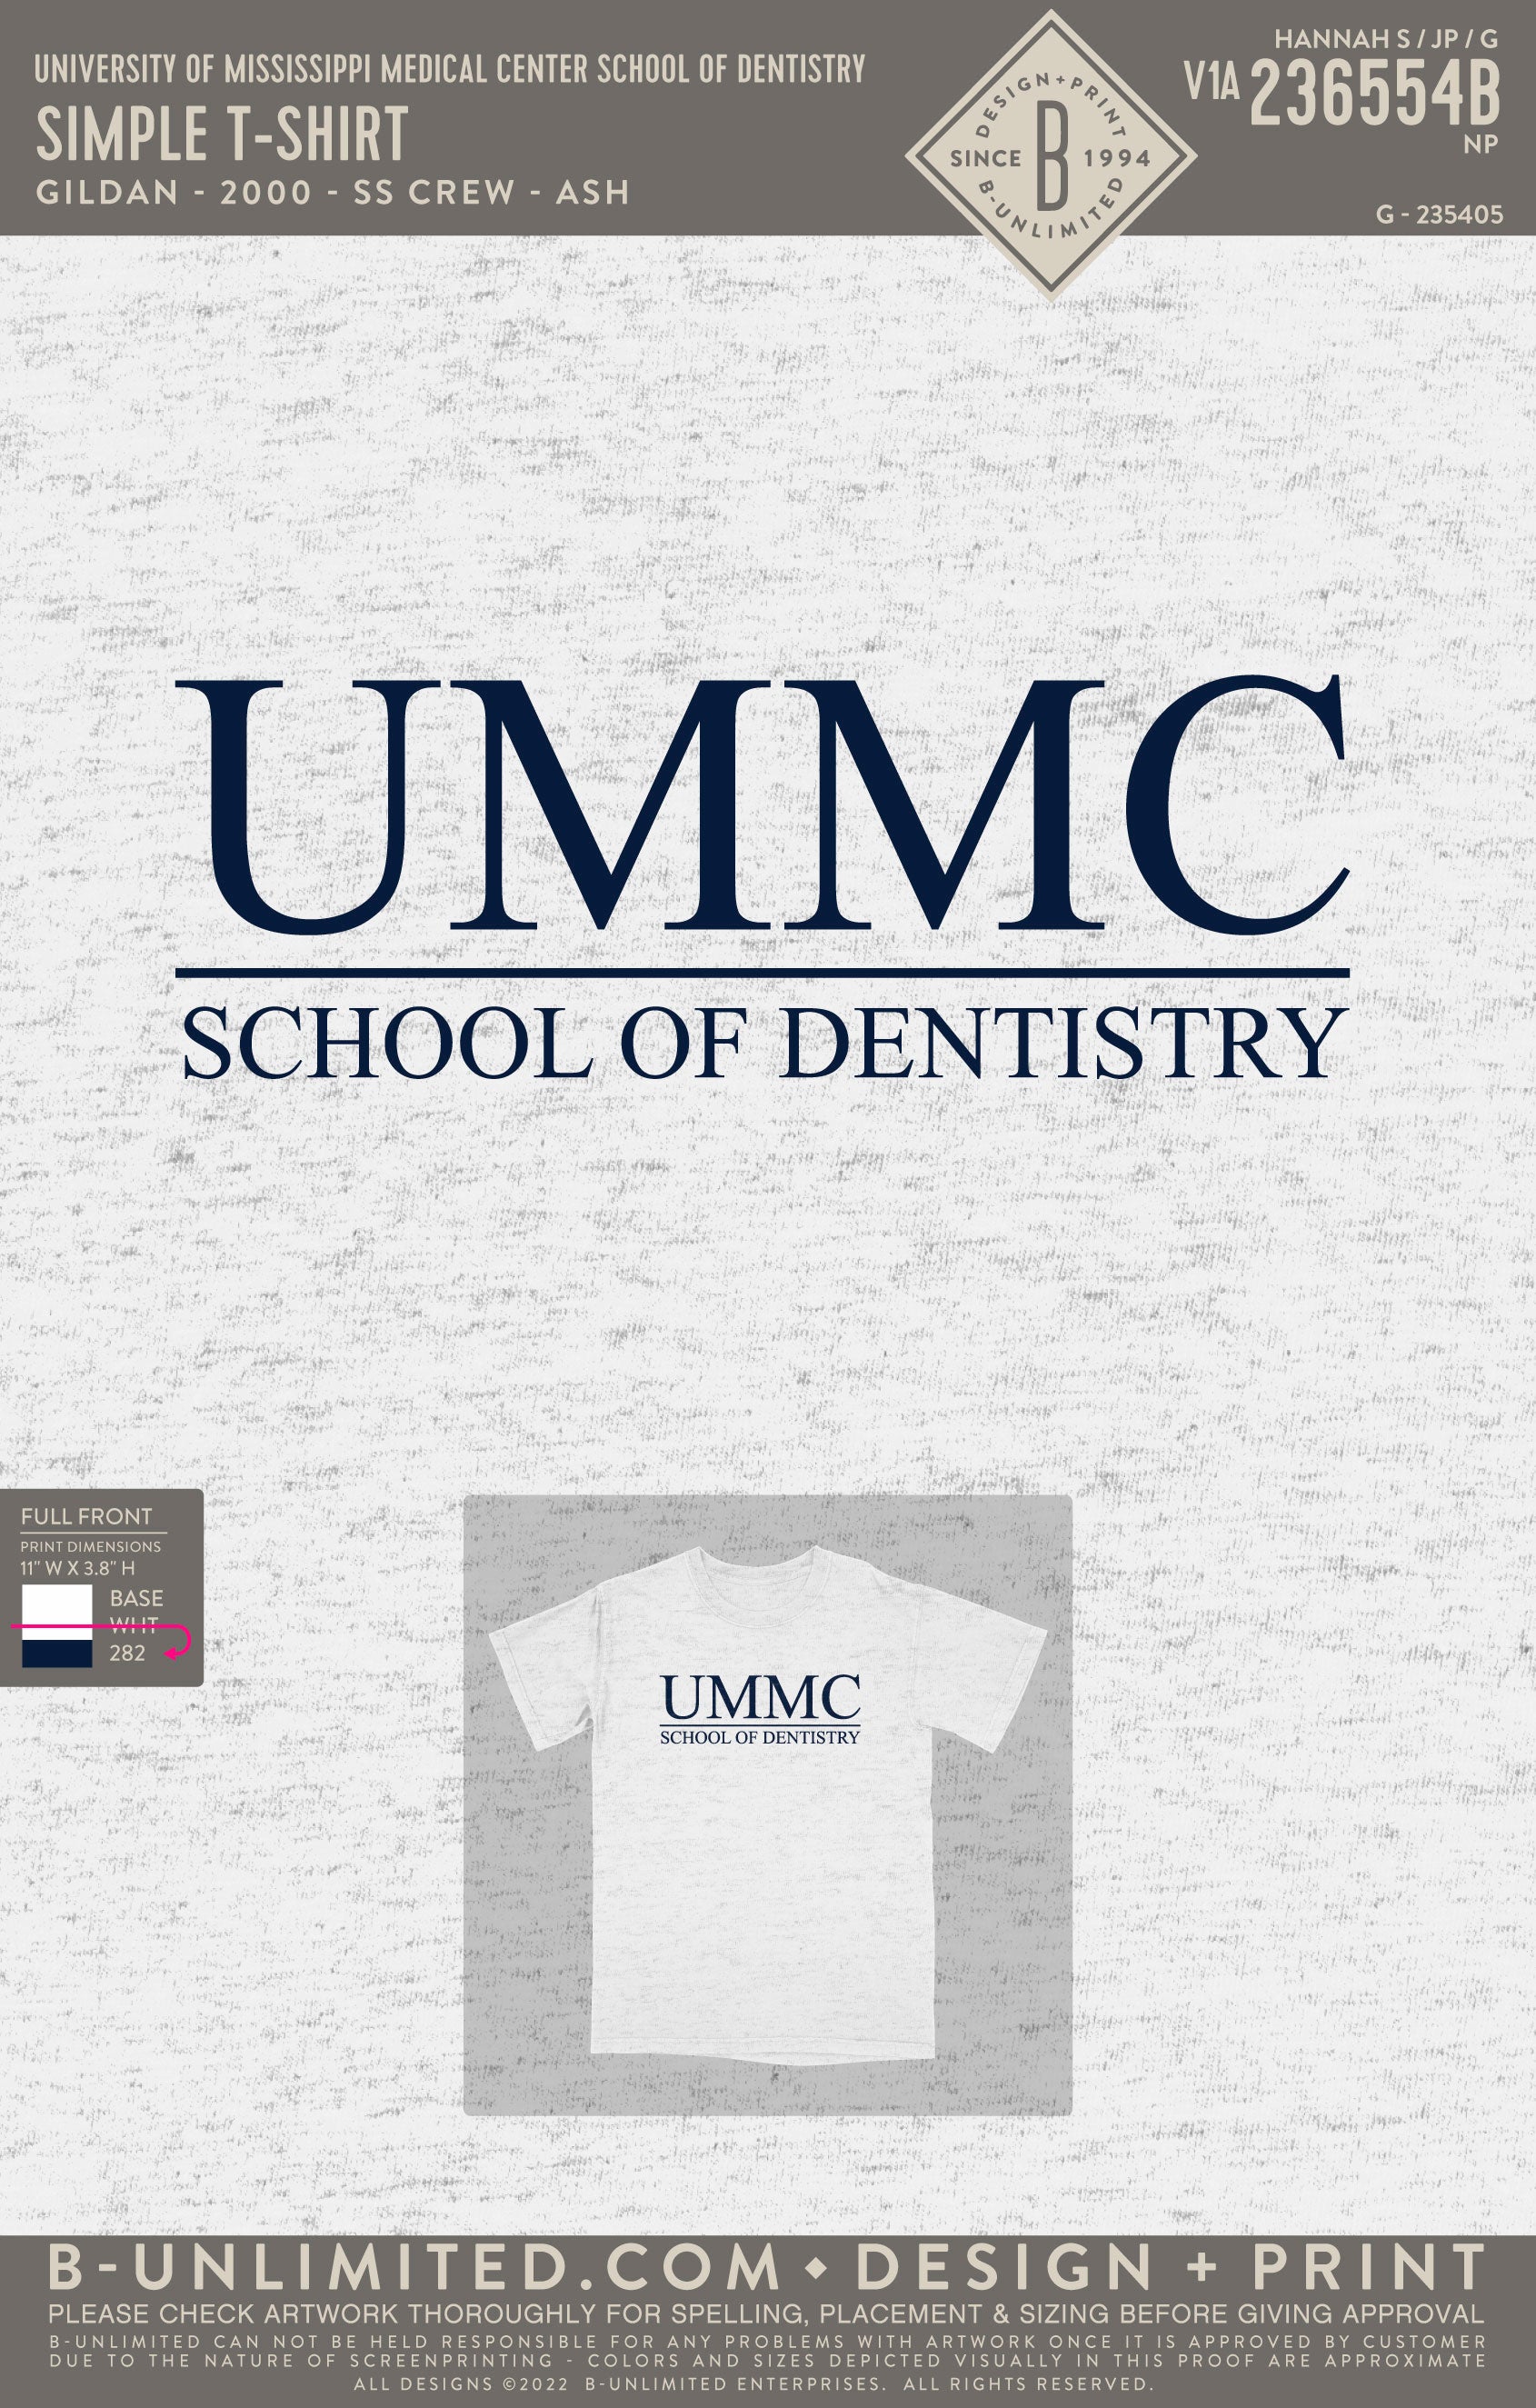 University of Mississippi Medical Center School of Dentistry - Simple T-Shirt - Gildan - 2000 - SS Crew - Ash Grey